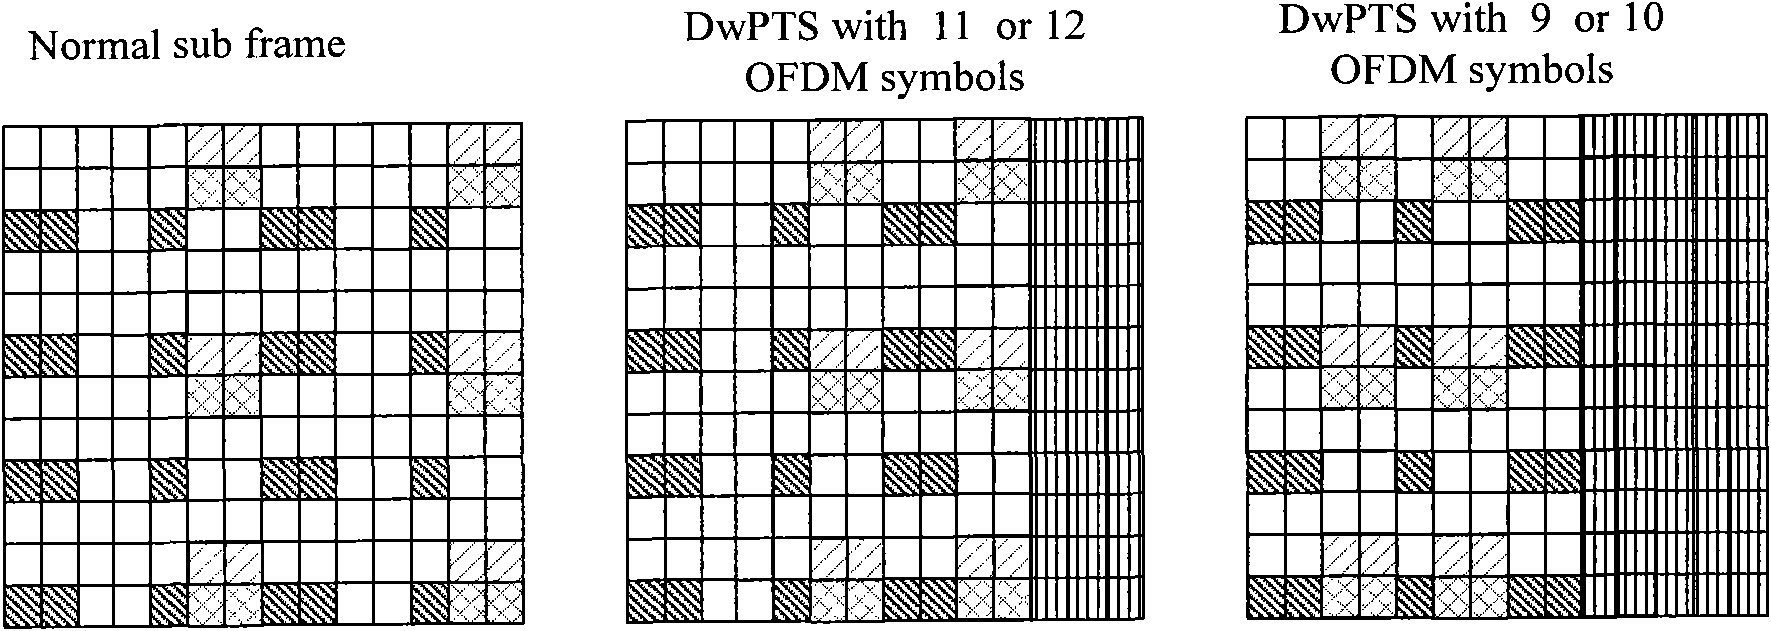 Data symbol orthogonal processing method and device